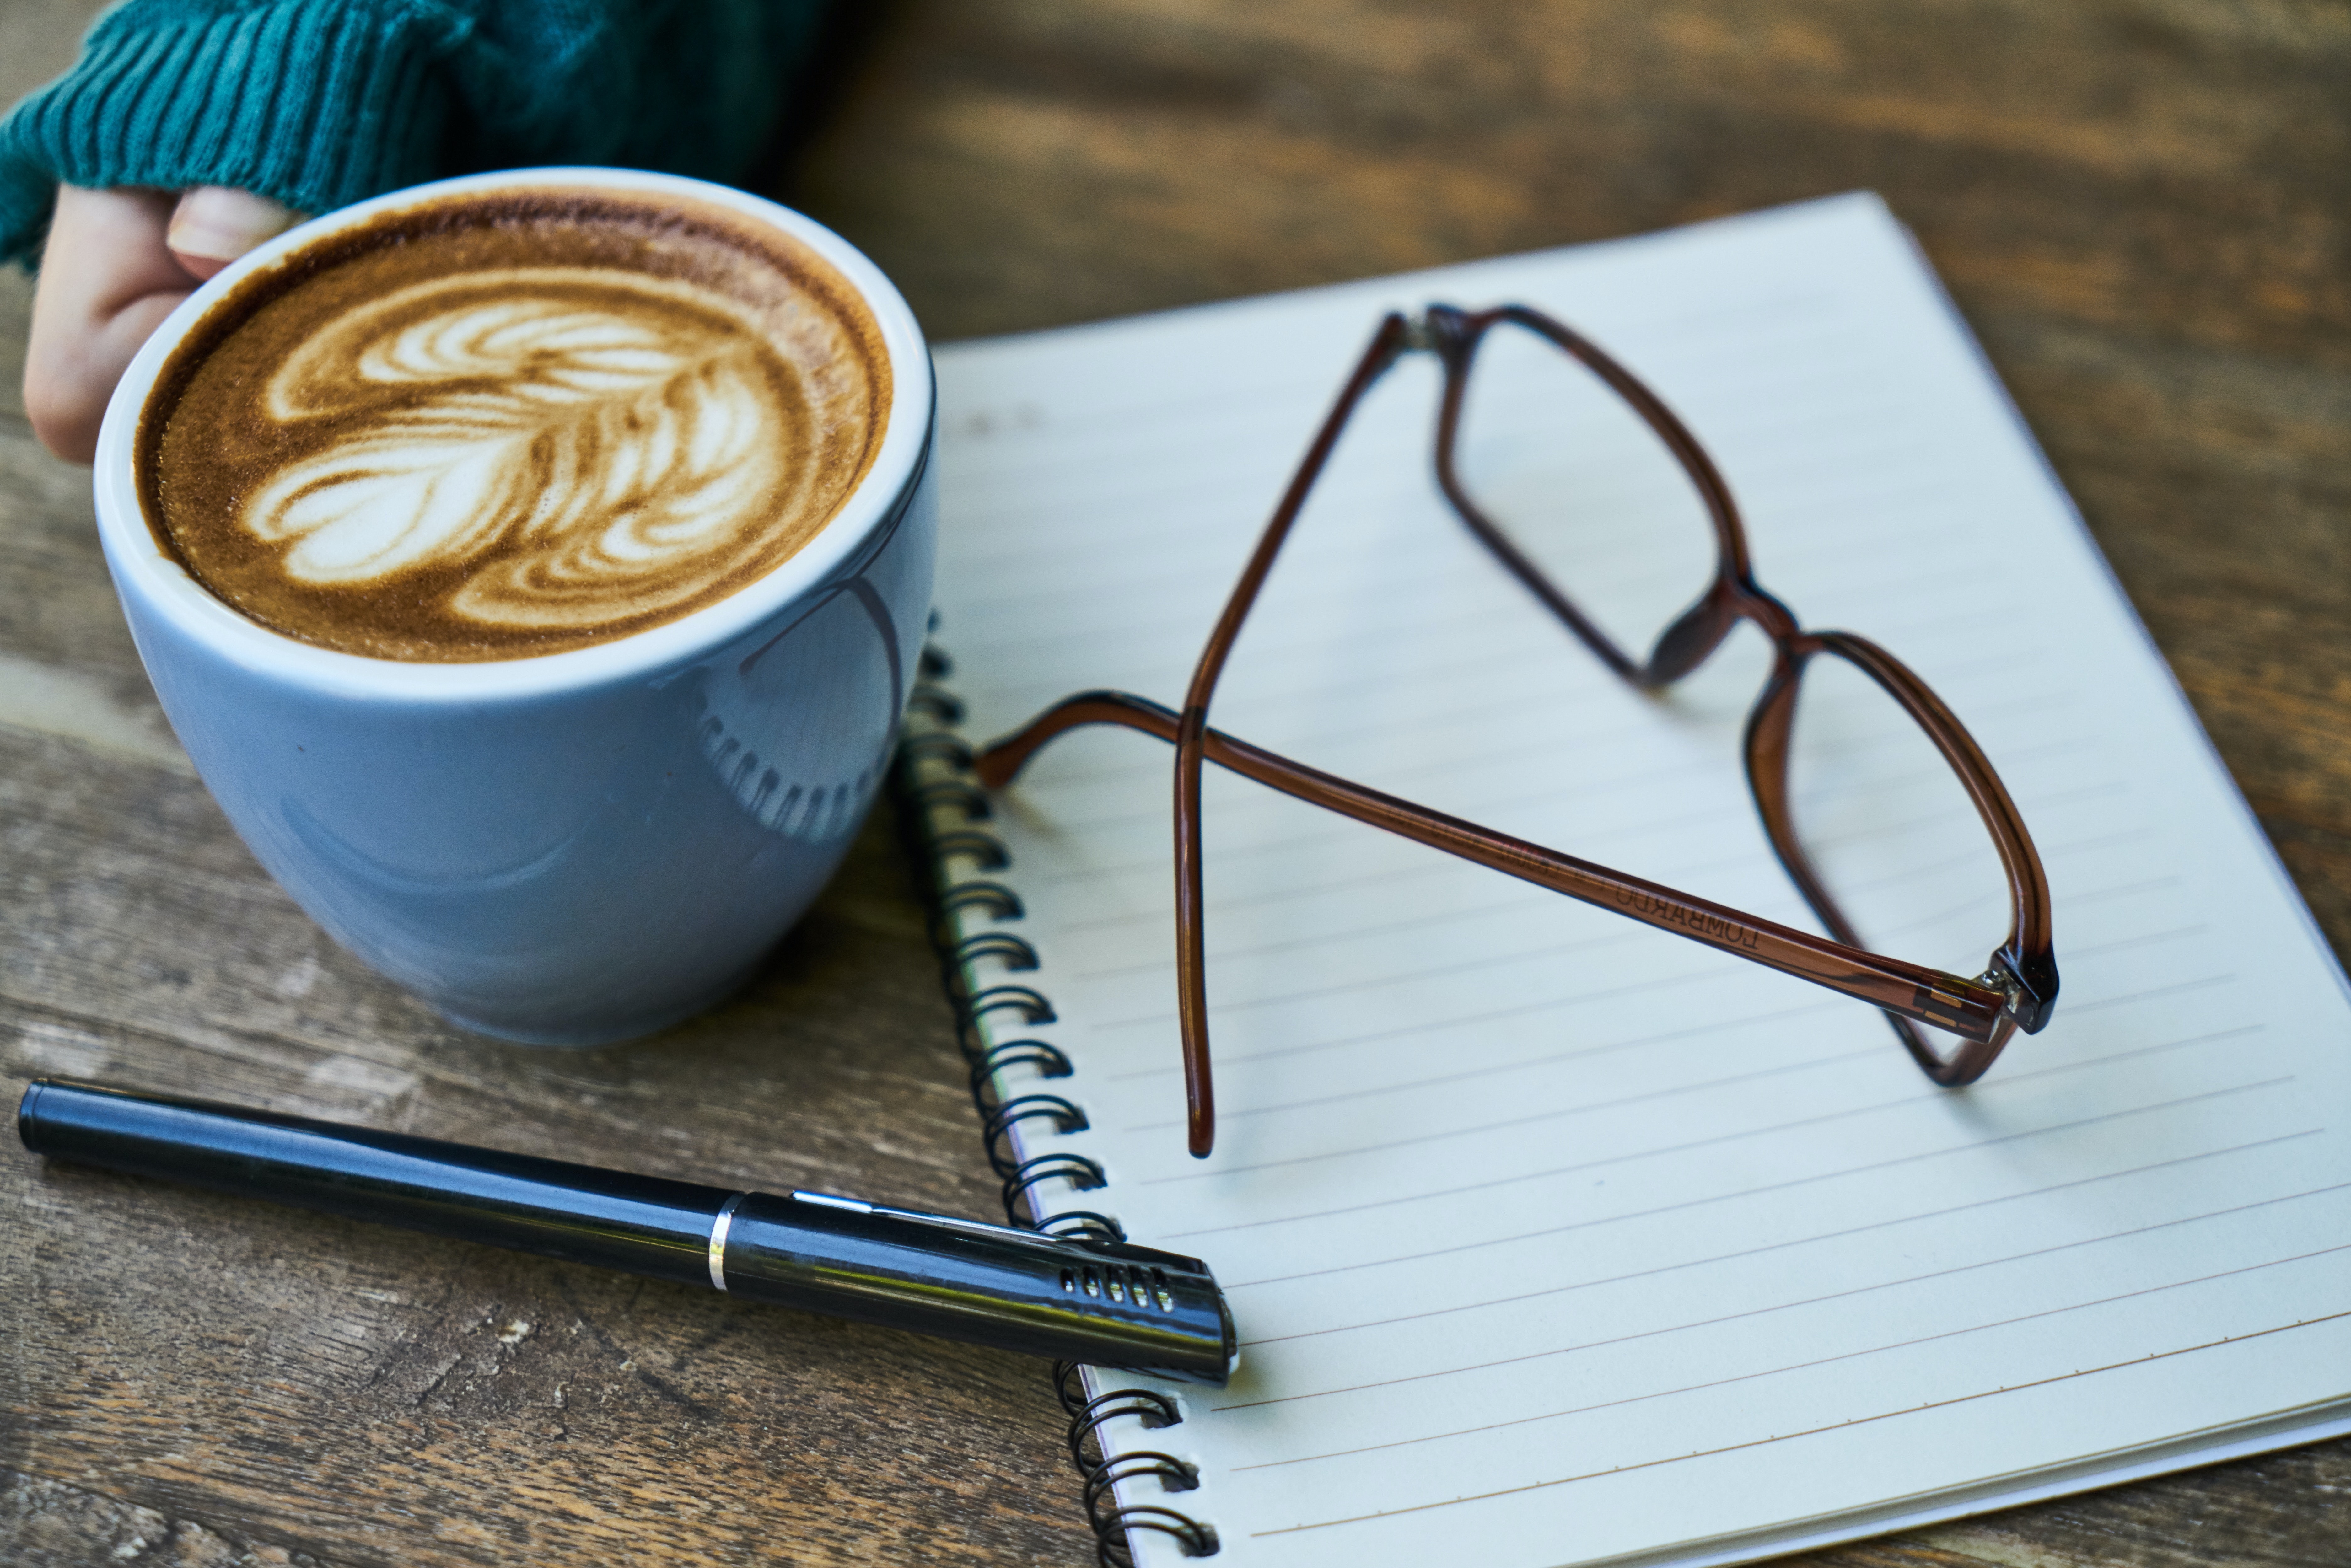 Coffee notebook and eyeglass